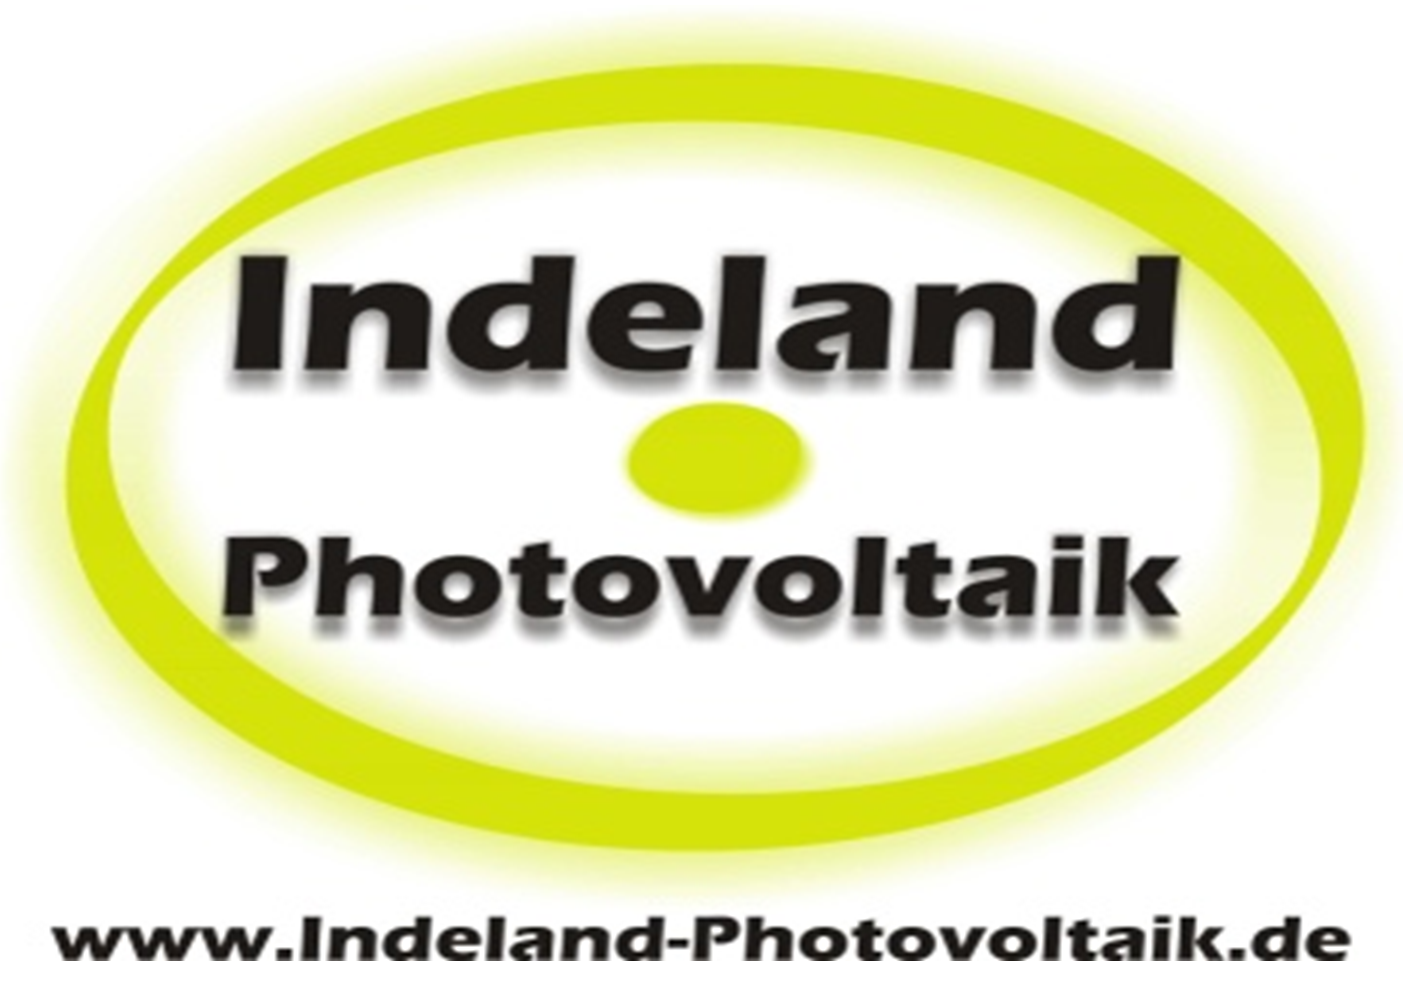 Indeland Logo